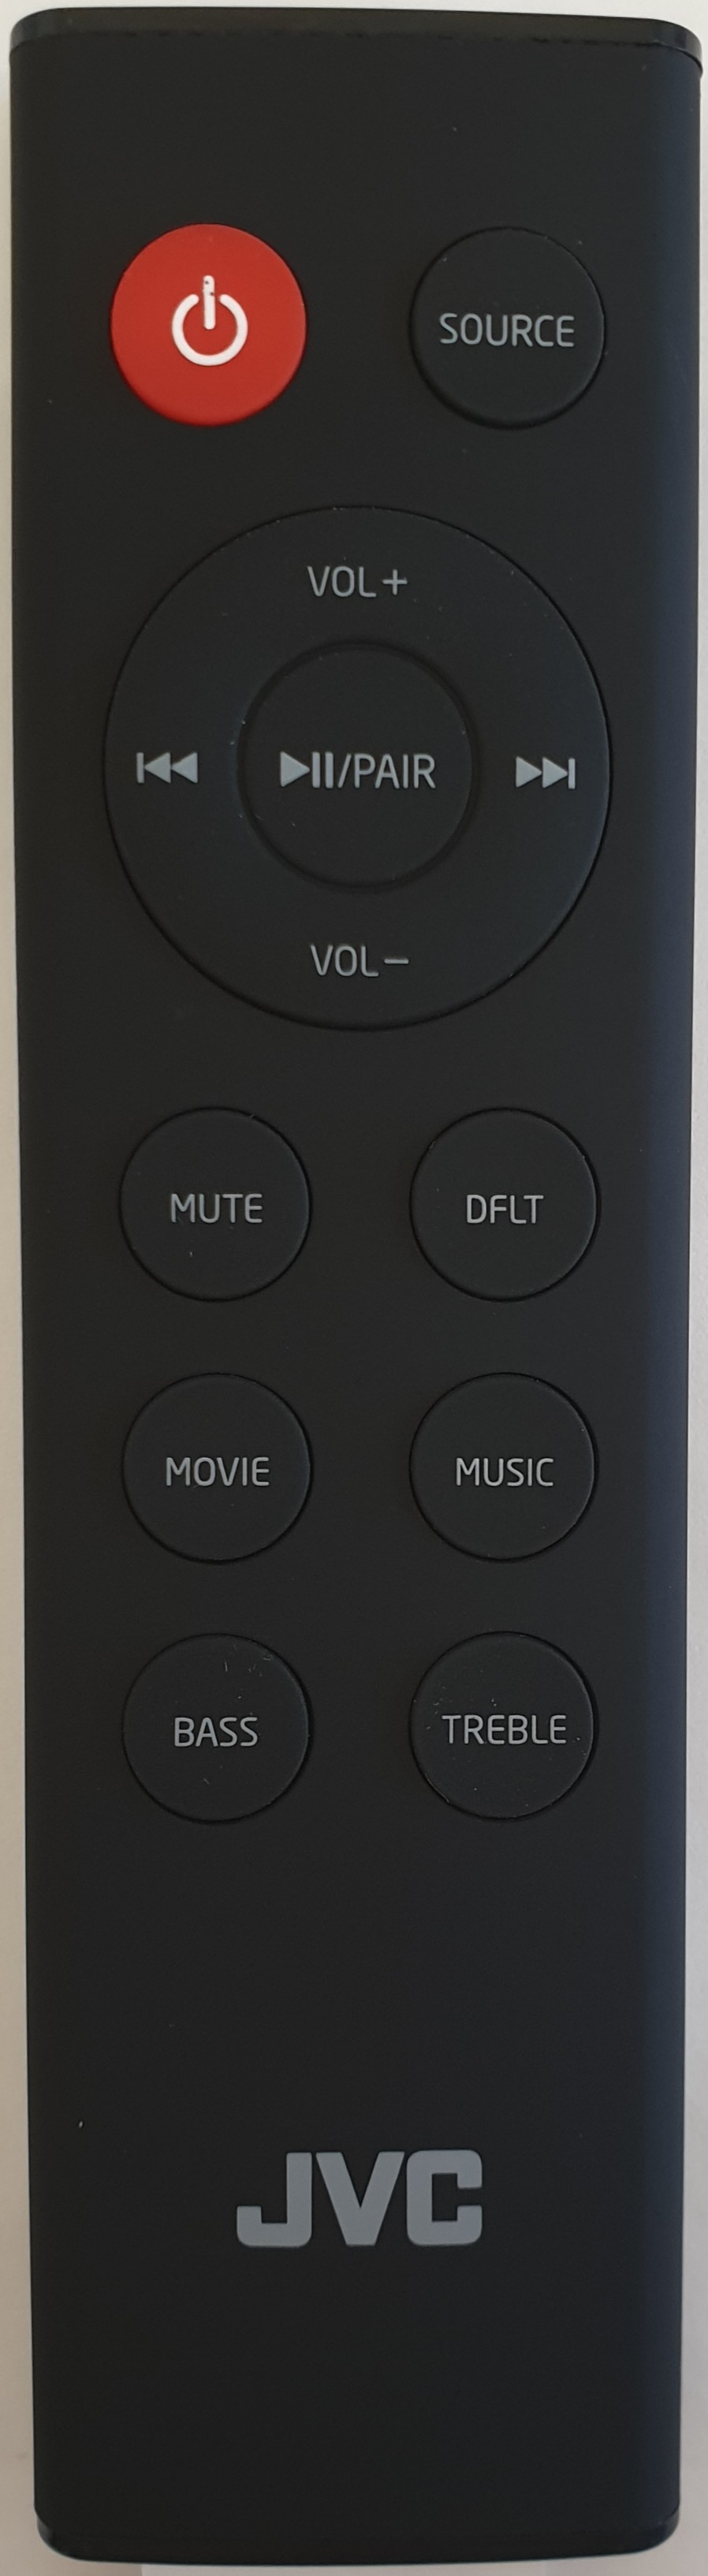 JVC RM-STHD227 Remote Control Original